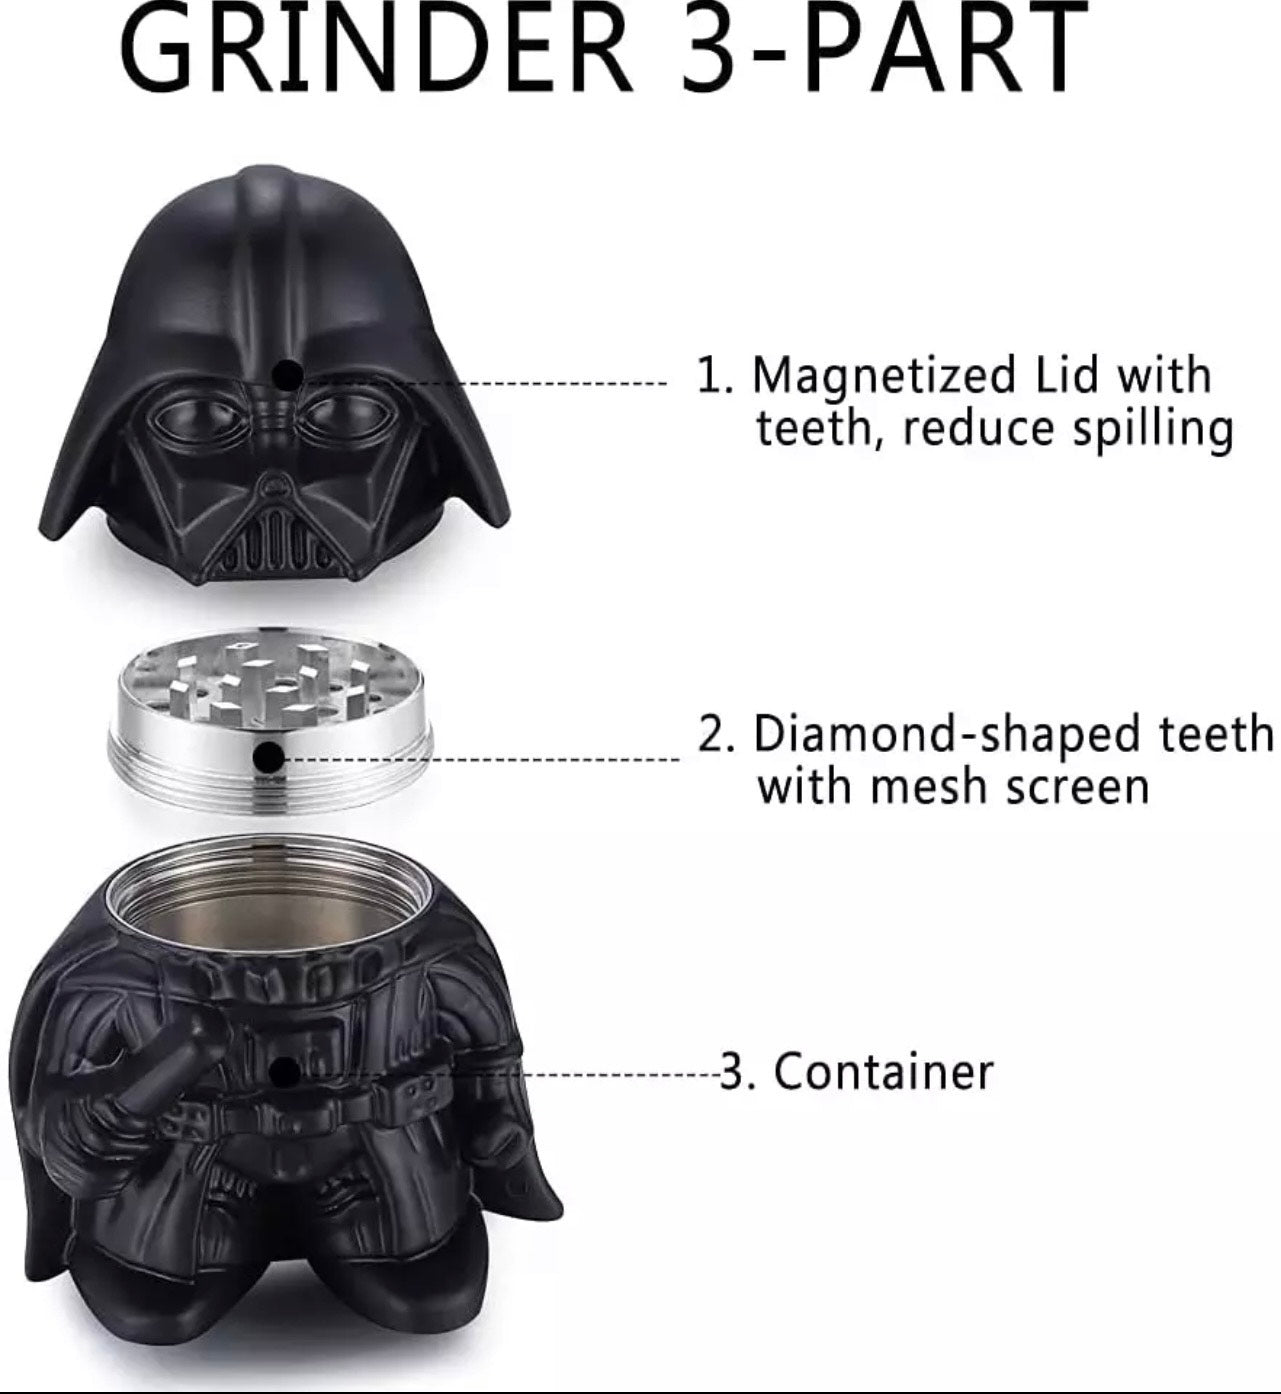 Disney Star Wars Figure Darth Vader BB-8 Tobacco Herb Spice